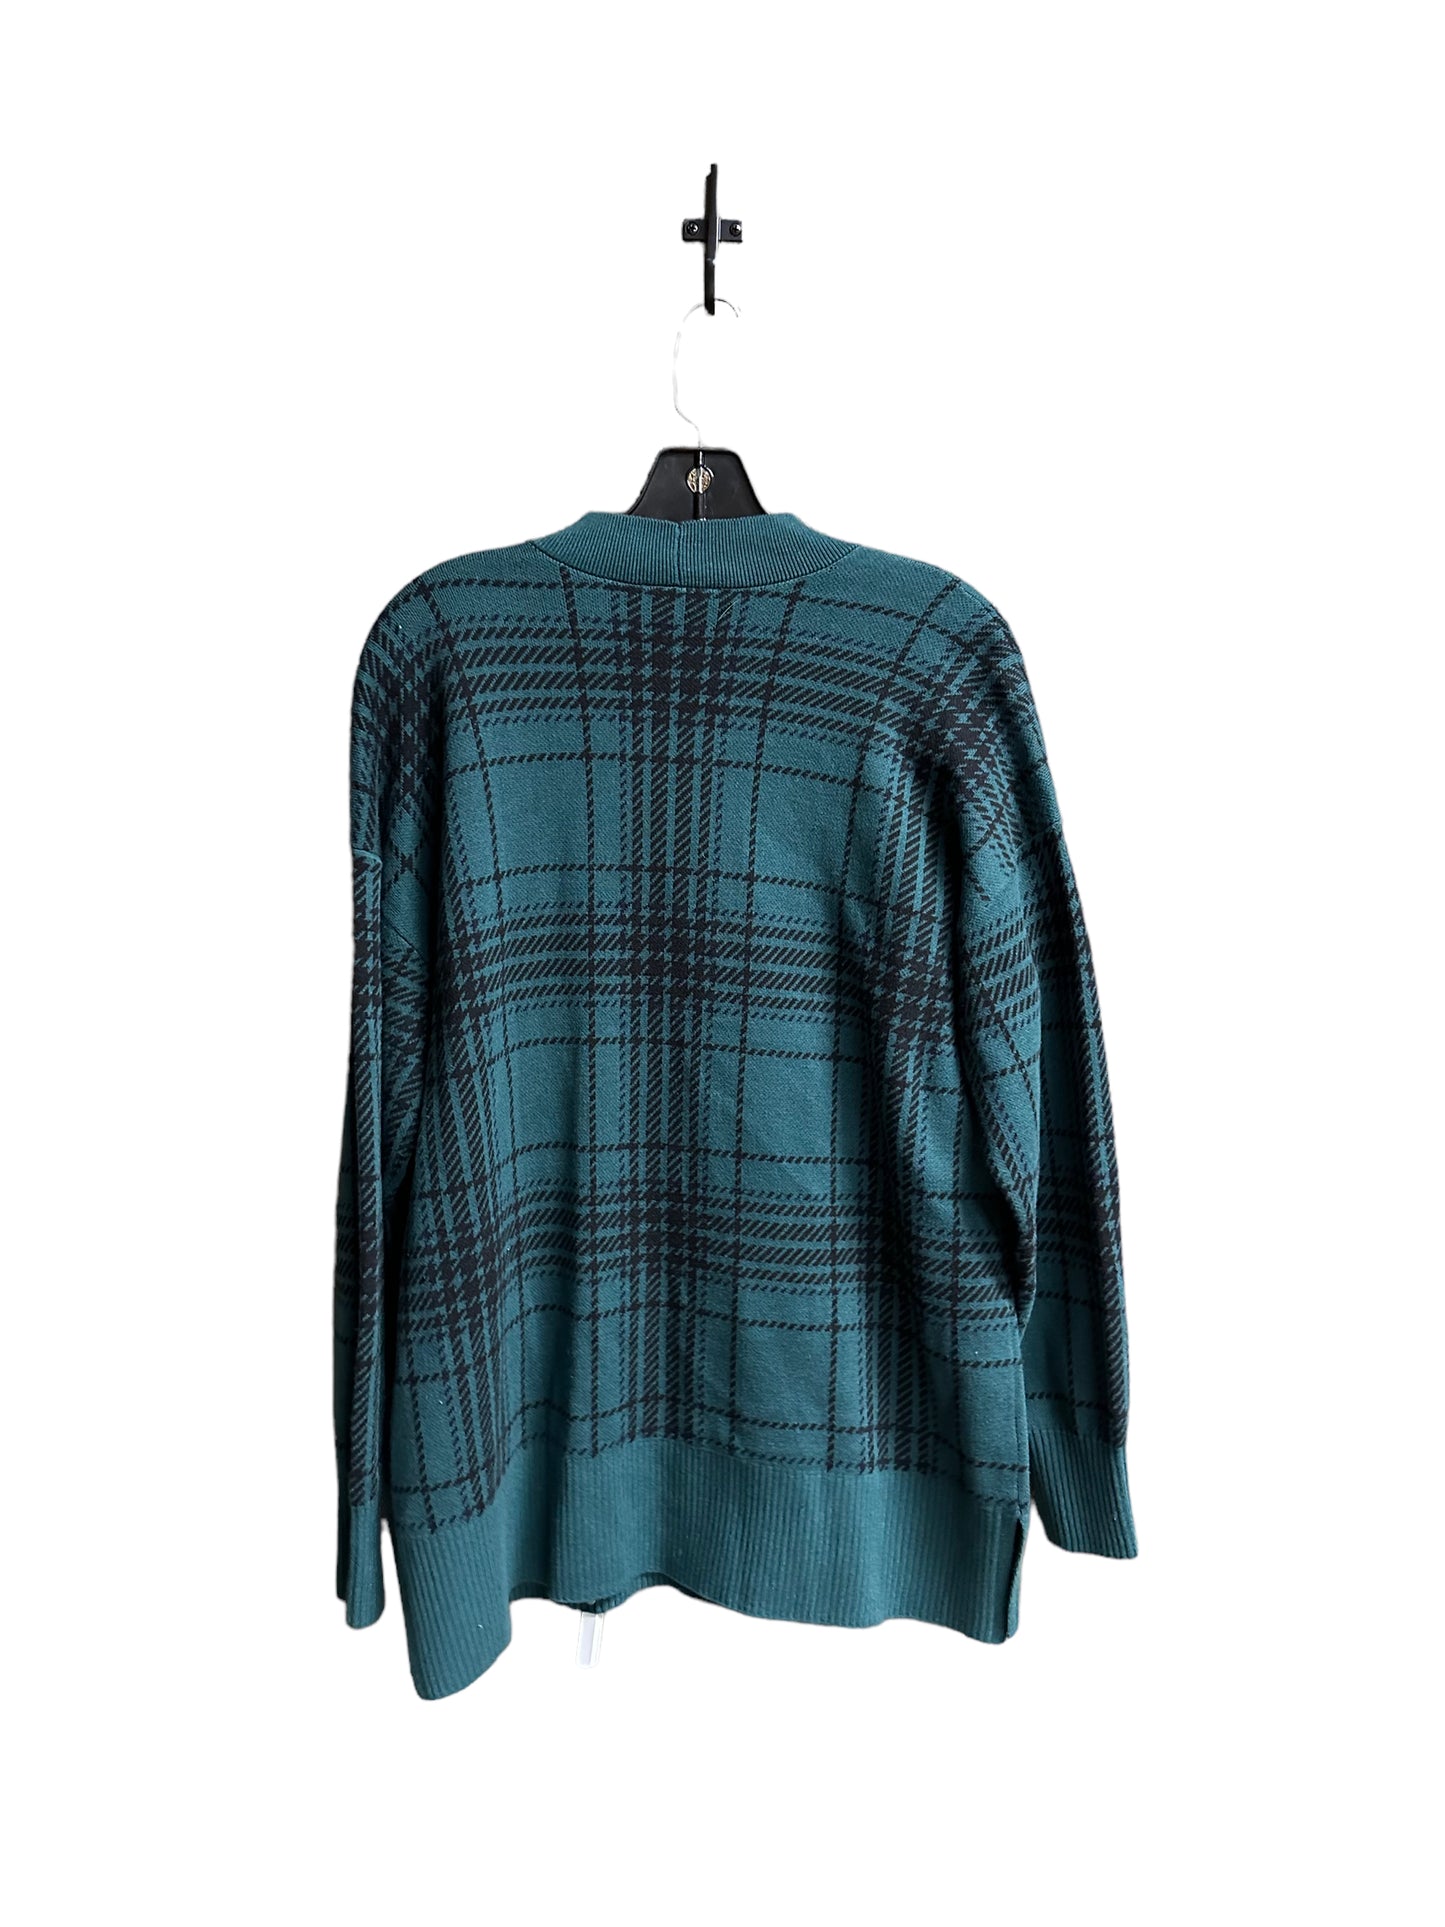 Sweater Cardigan By Loft  Size: L